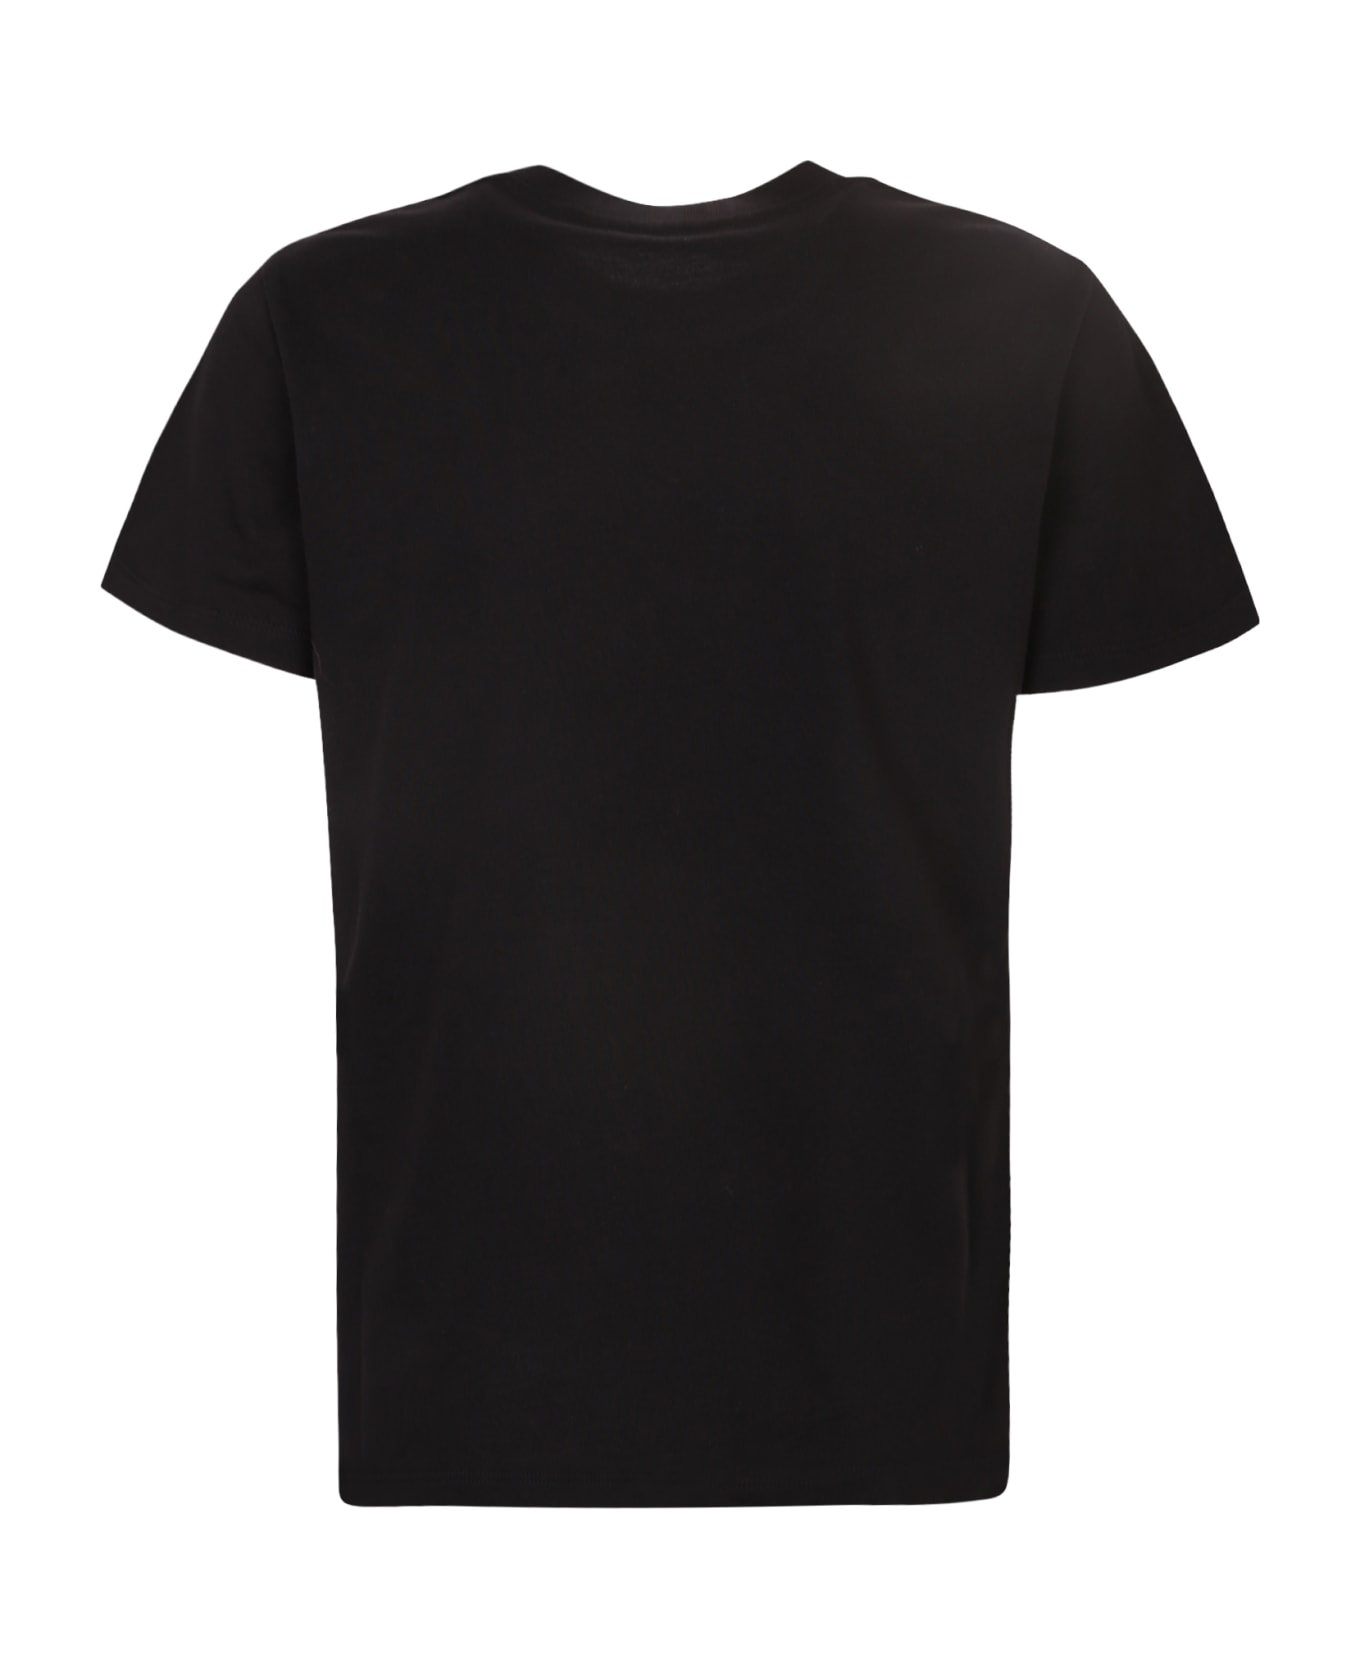 Moncler T-shirt Made Of Cotton Jersey - 999